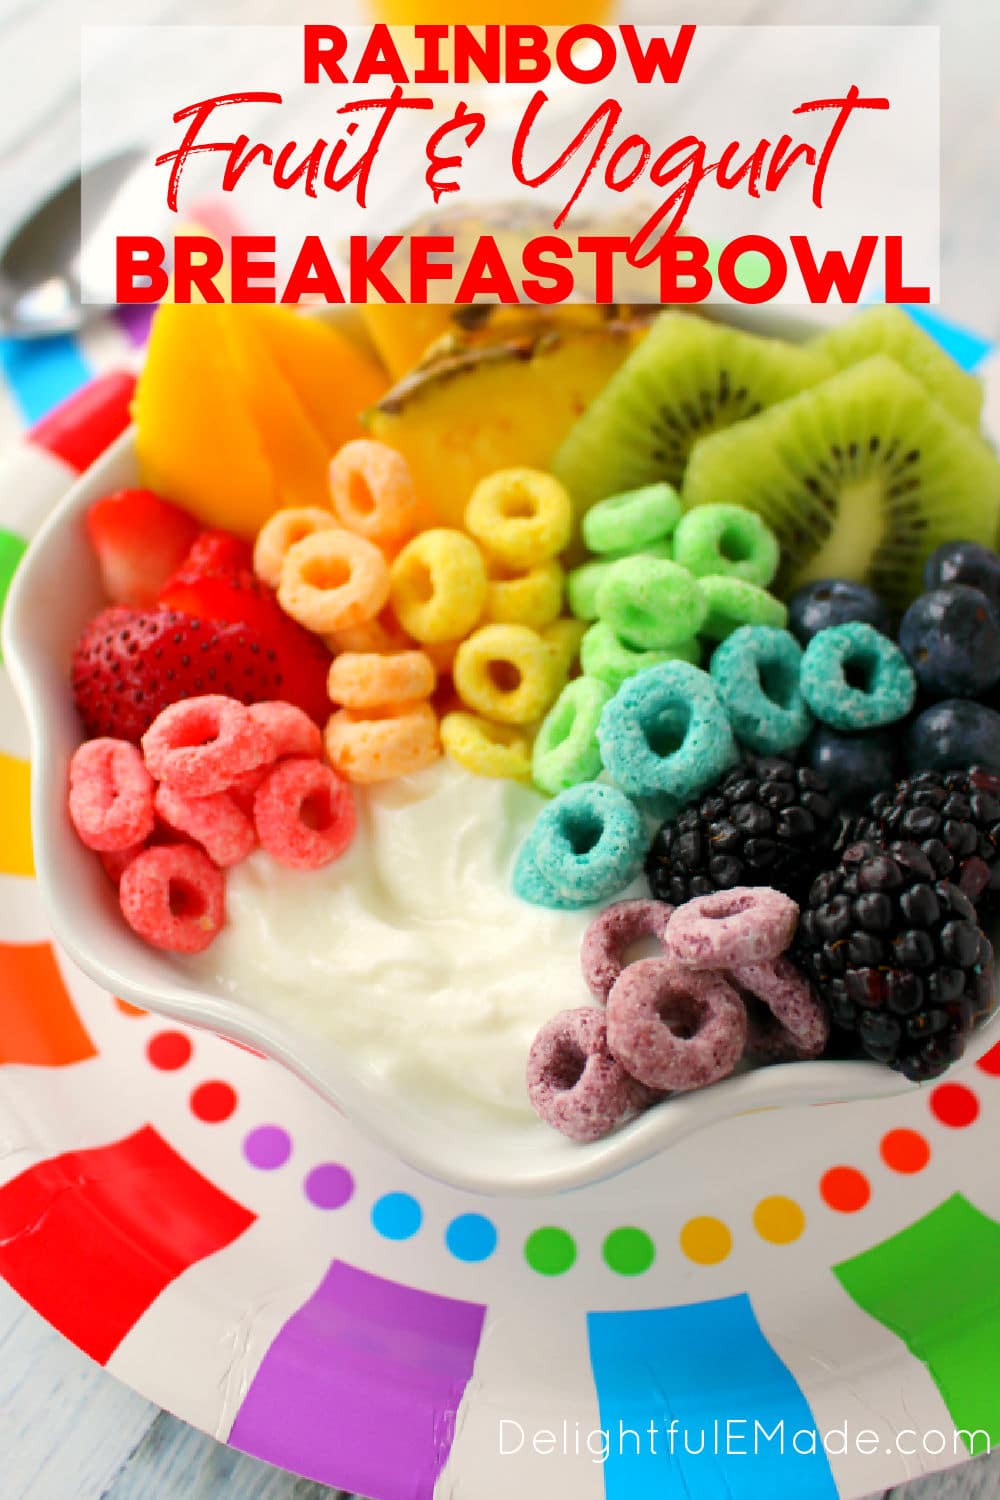 https://delightfulemade.com/wp-content/uploads/2021/03/Rainbow-Fruit-Yogurt-Breakfast-Bowls-Pin1.jpg